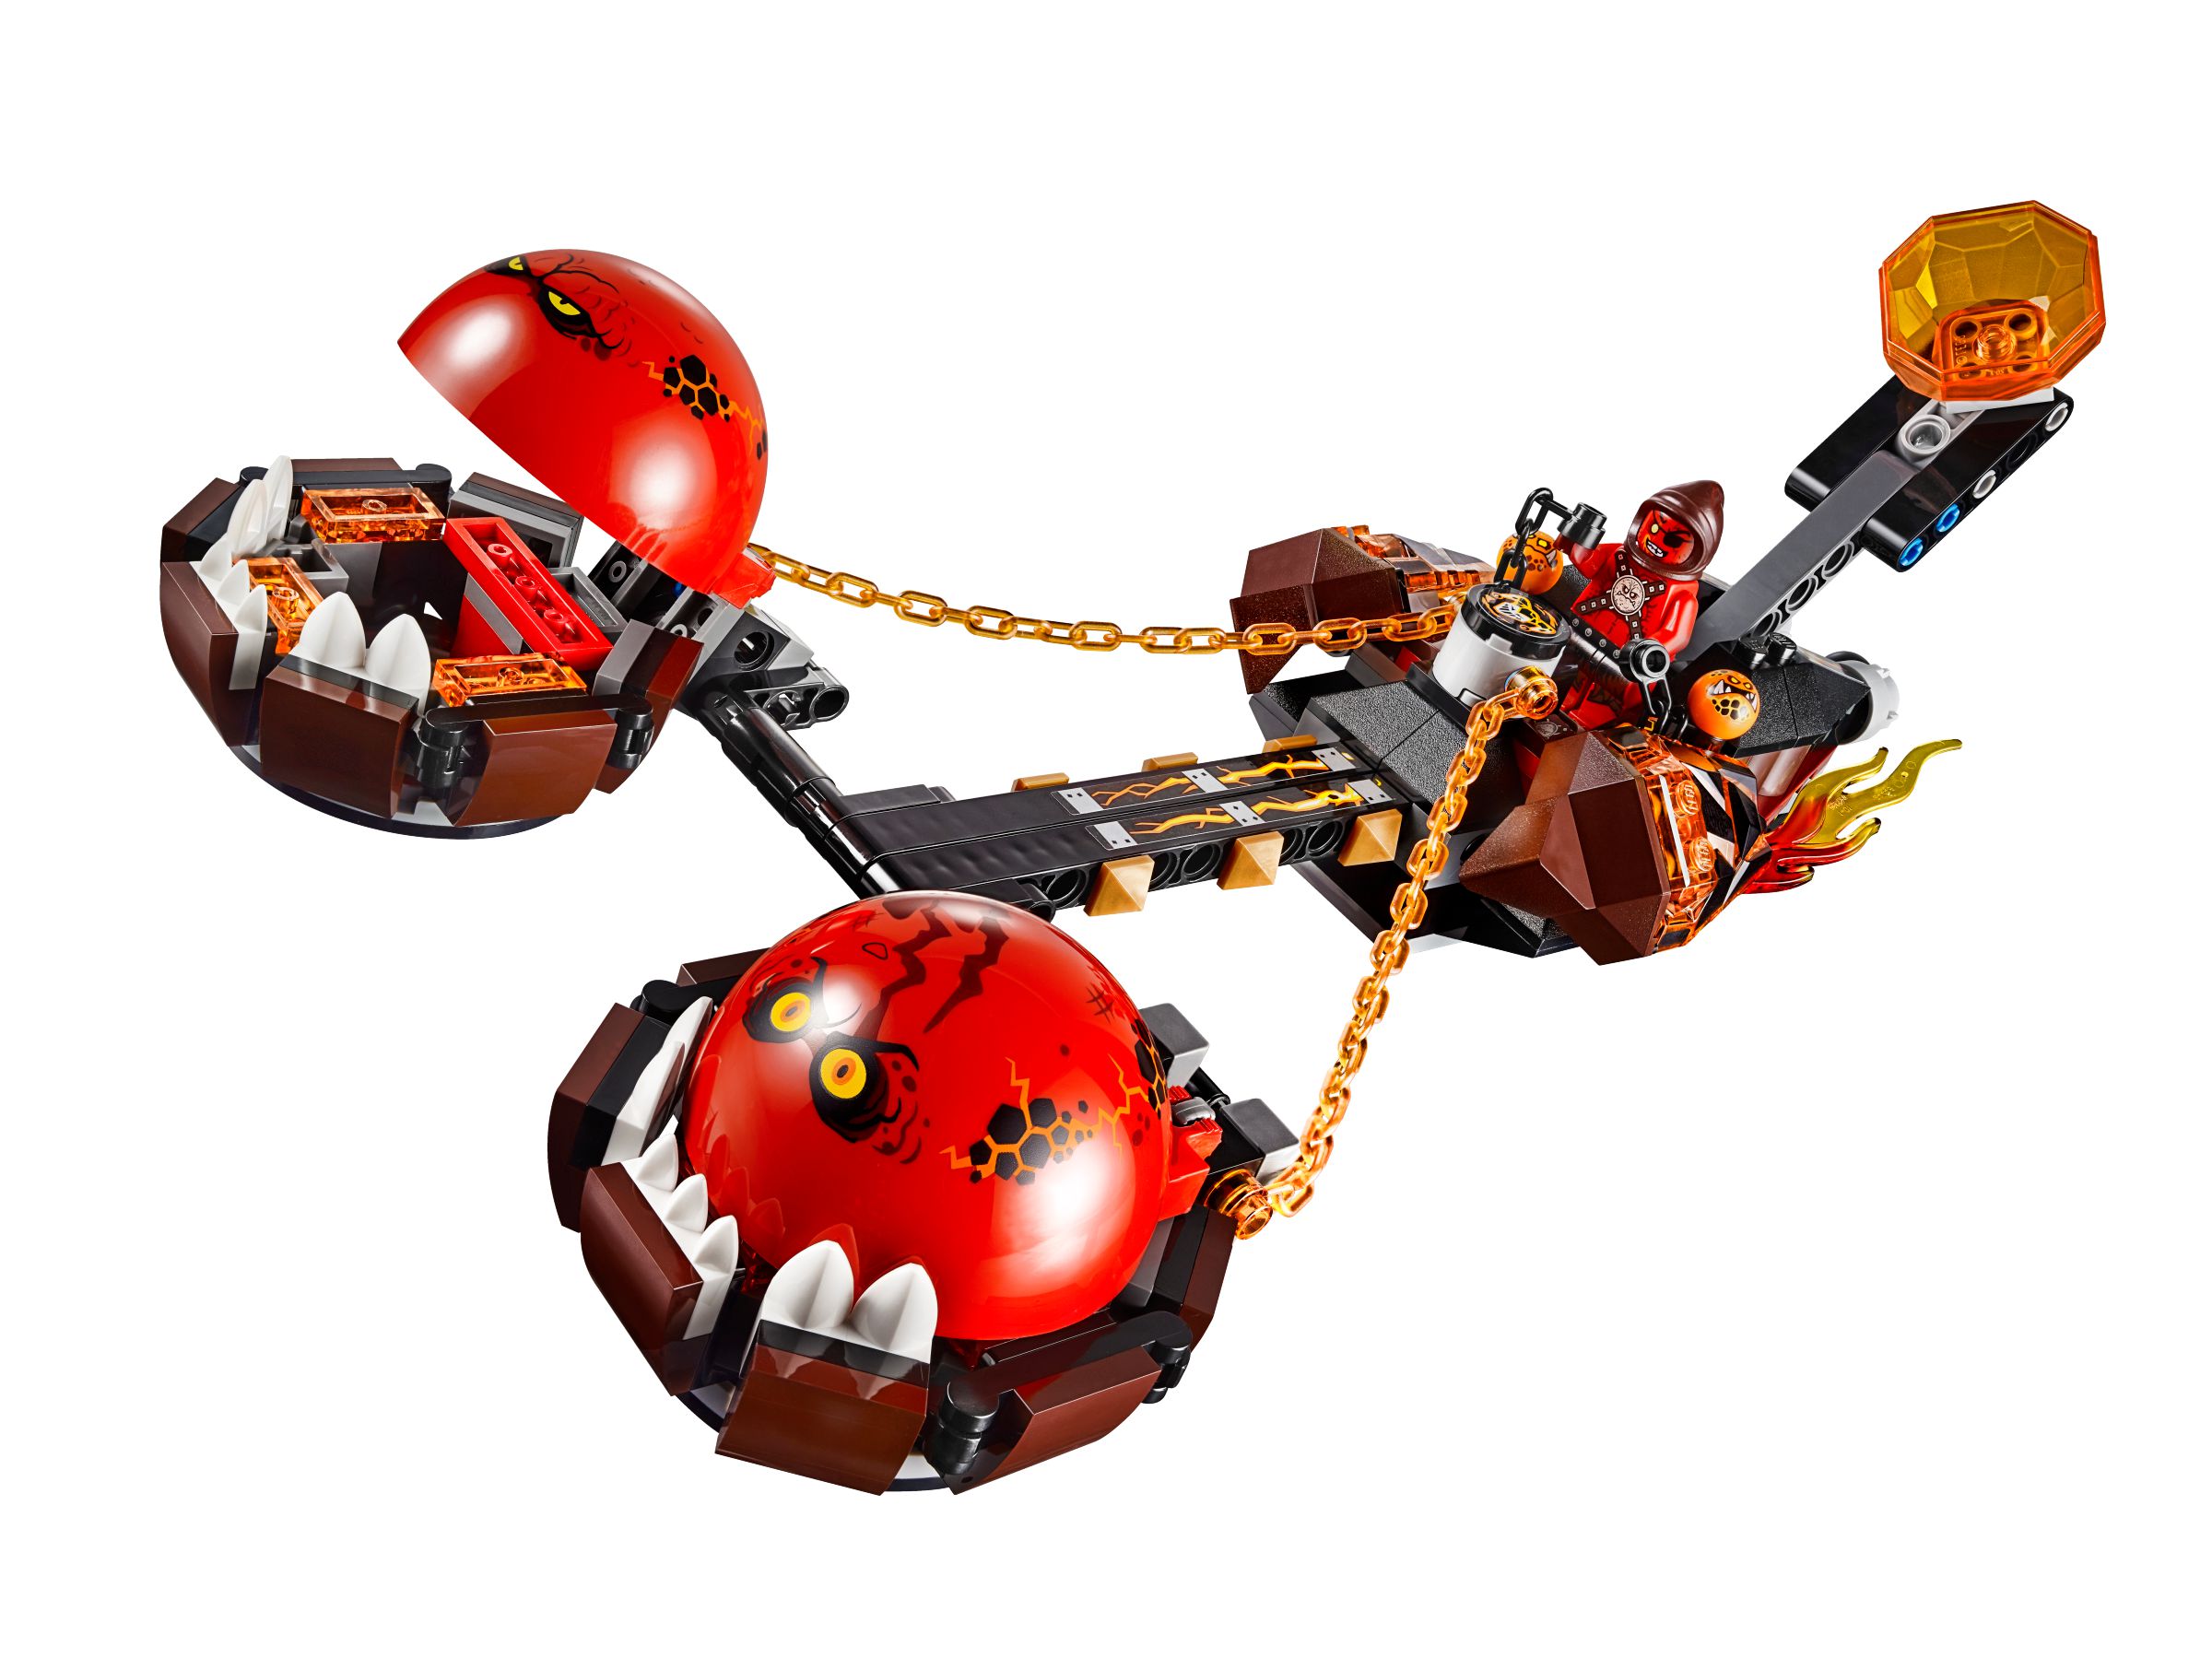 LEGO Nexo Knights 70314 Chaos-Kutsche des Monster-Meisters LEGO_70314_alt2.jpg